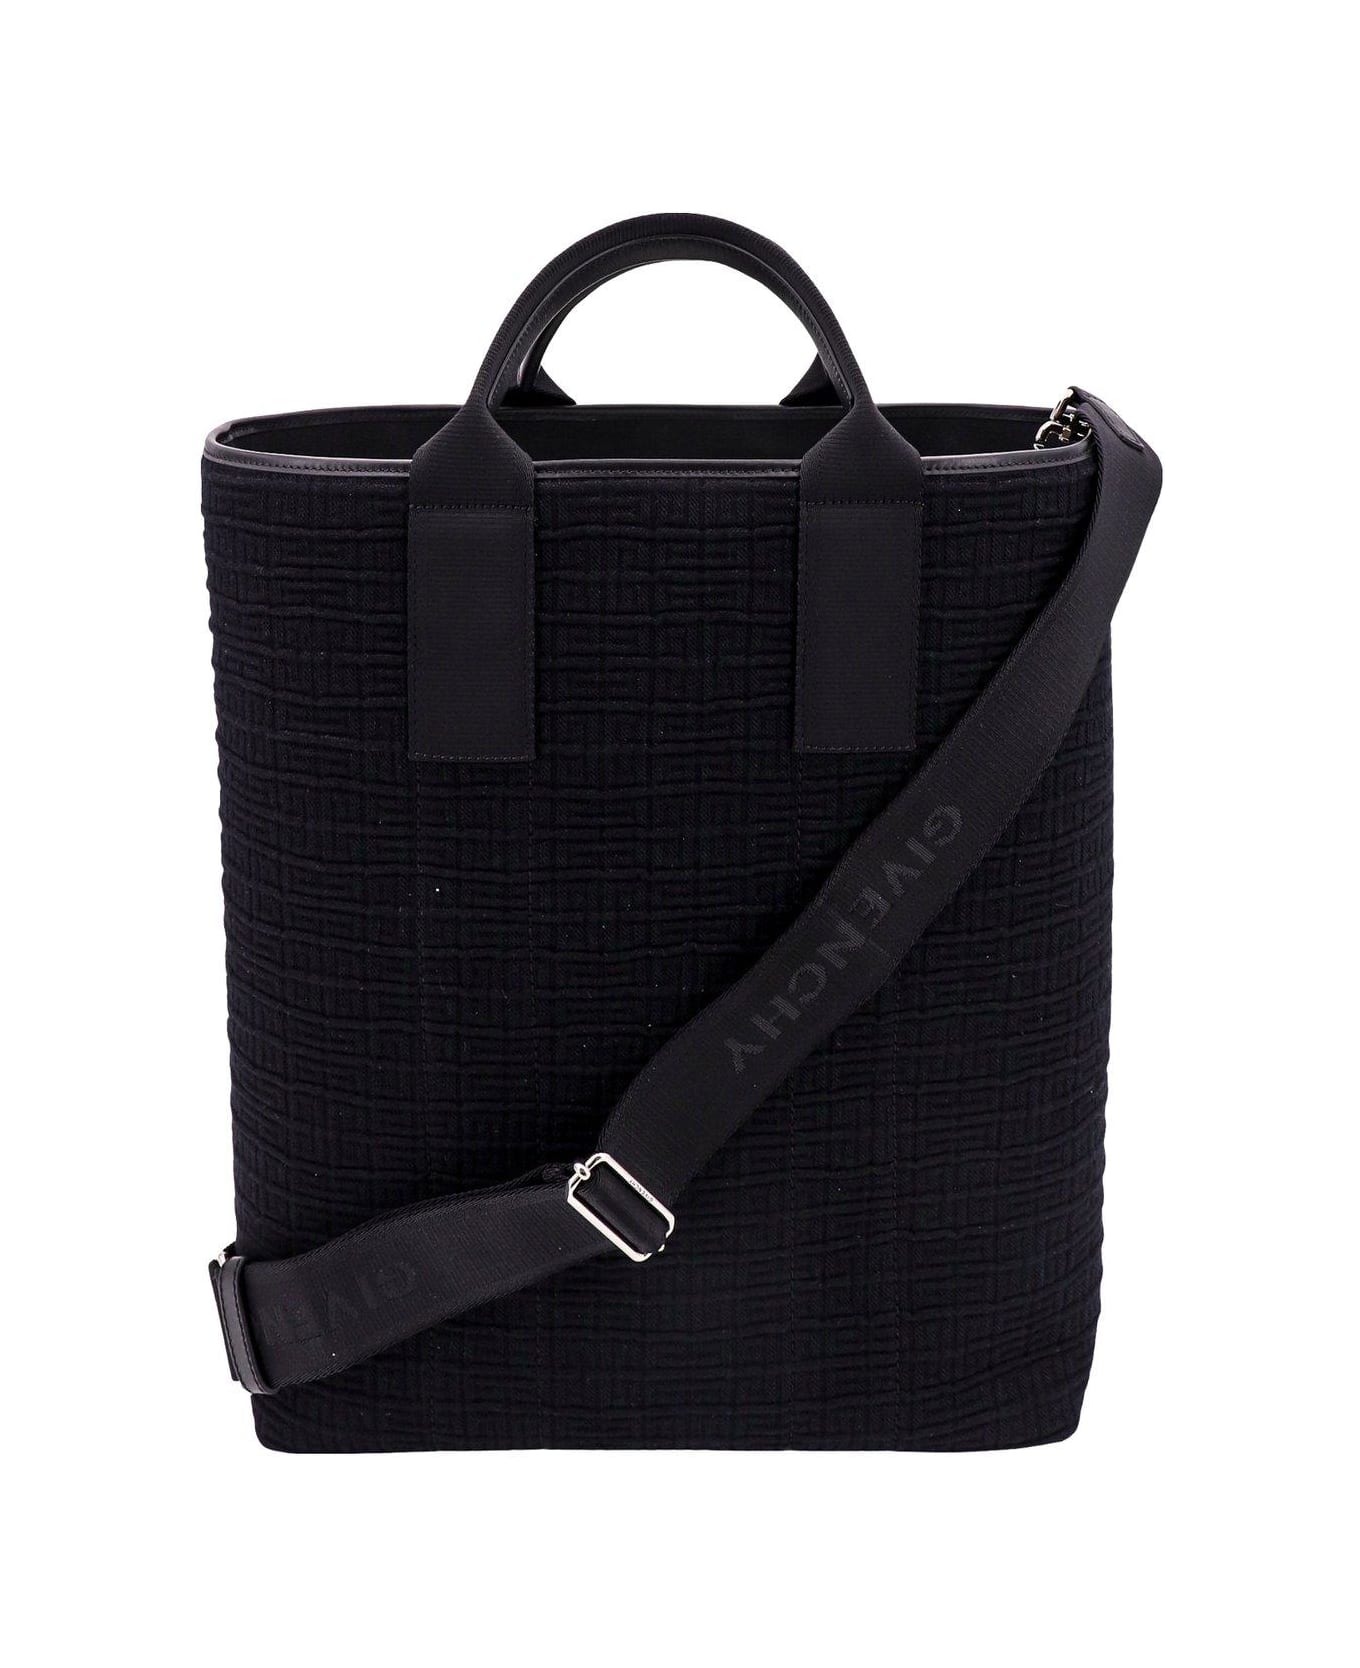 Givenchy Large G-essentials Tote Bag - Black